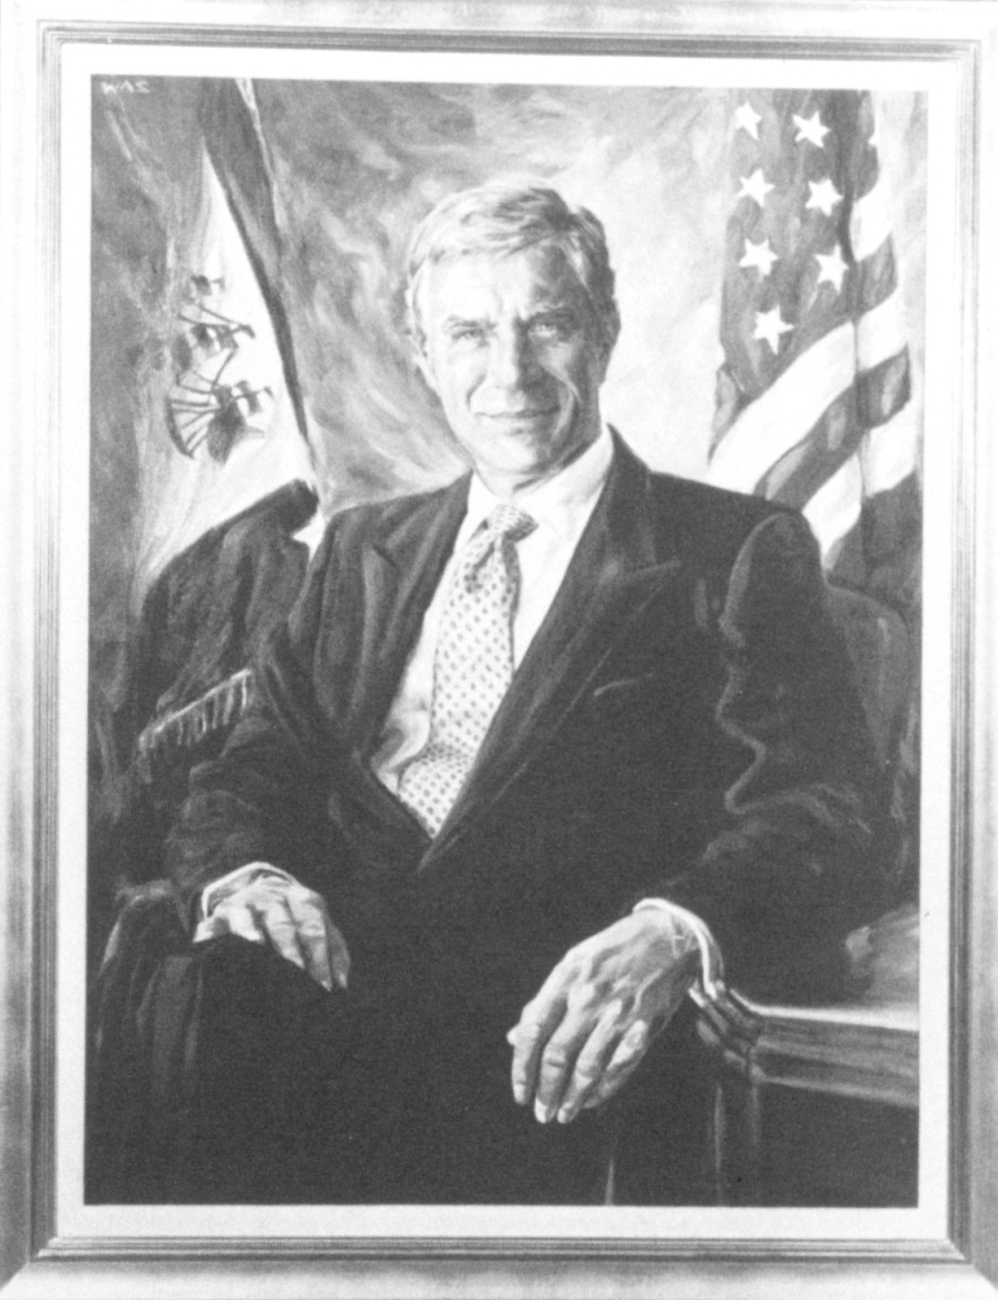 Robert Adam Mosbacher, 1927-, twenty-eighth Secretary of Commerce